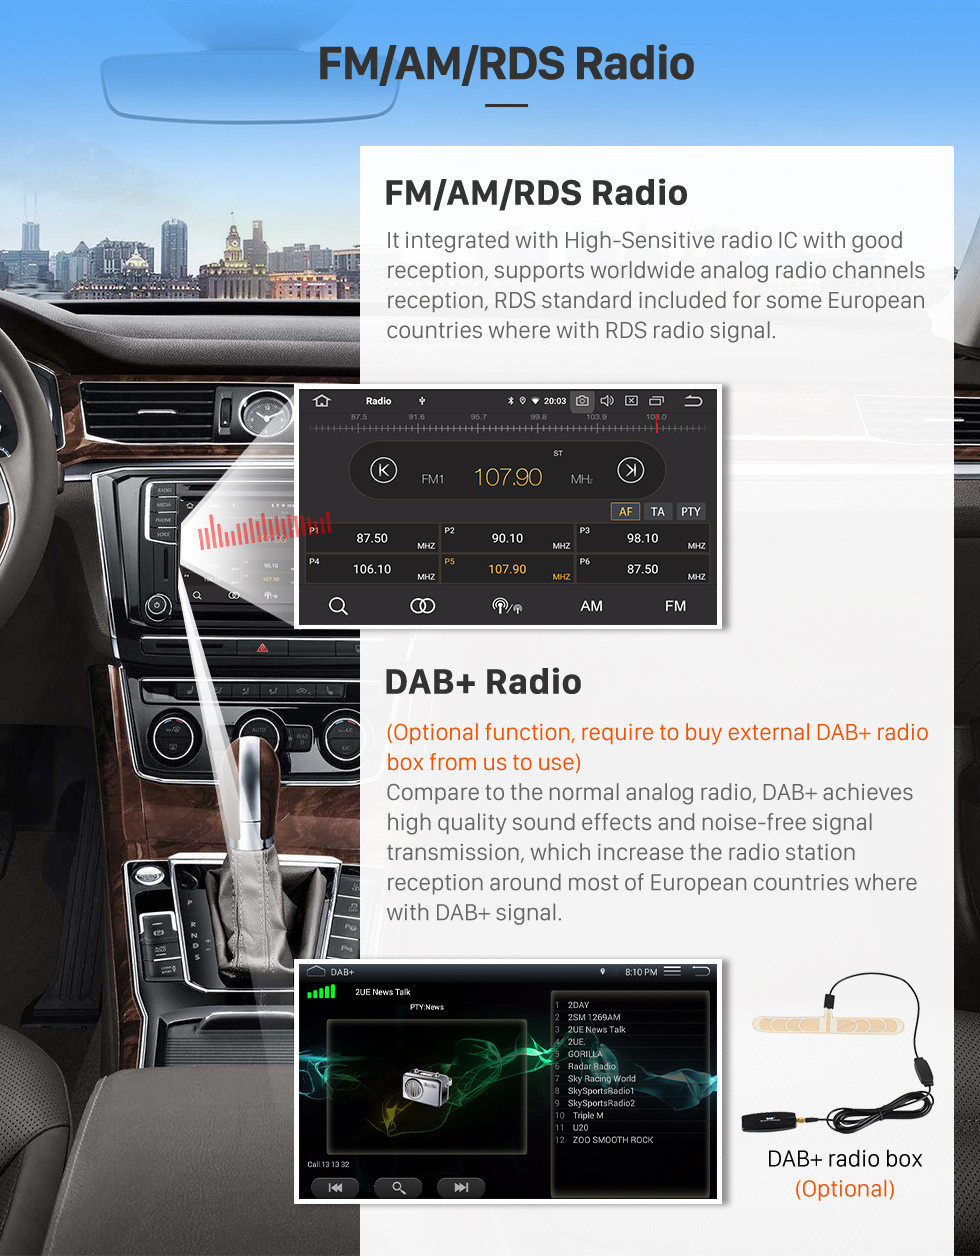 Seicane 10,1 pouces Android 13.0 Radio pour 2009-2019 Ford New Transit Bluetooth WIFI HD Écran tactile Navigation GPS Carplay Prise en charge USB TPMS DAB +